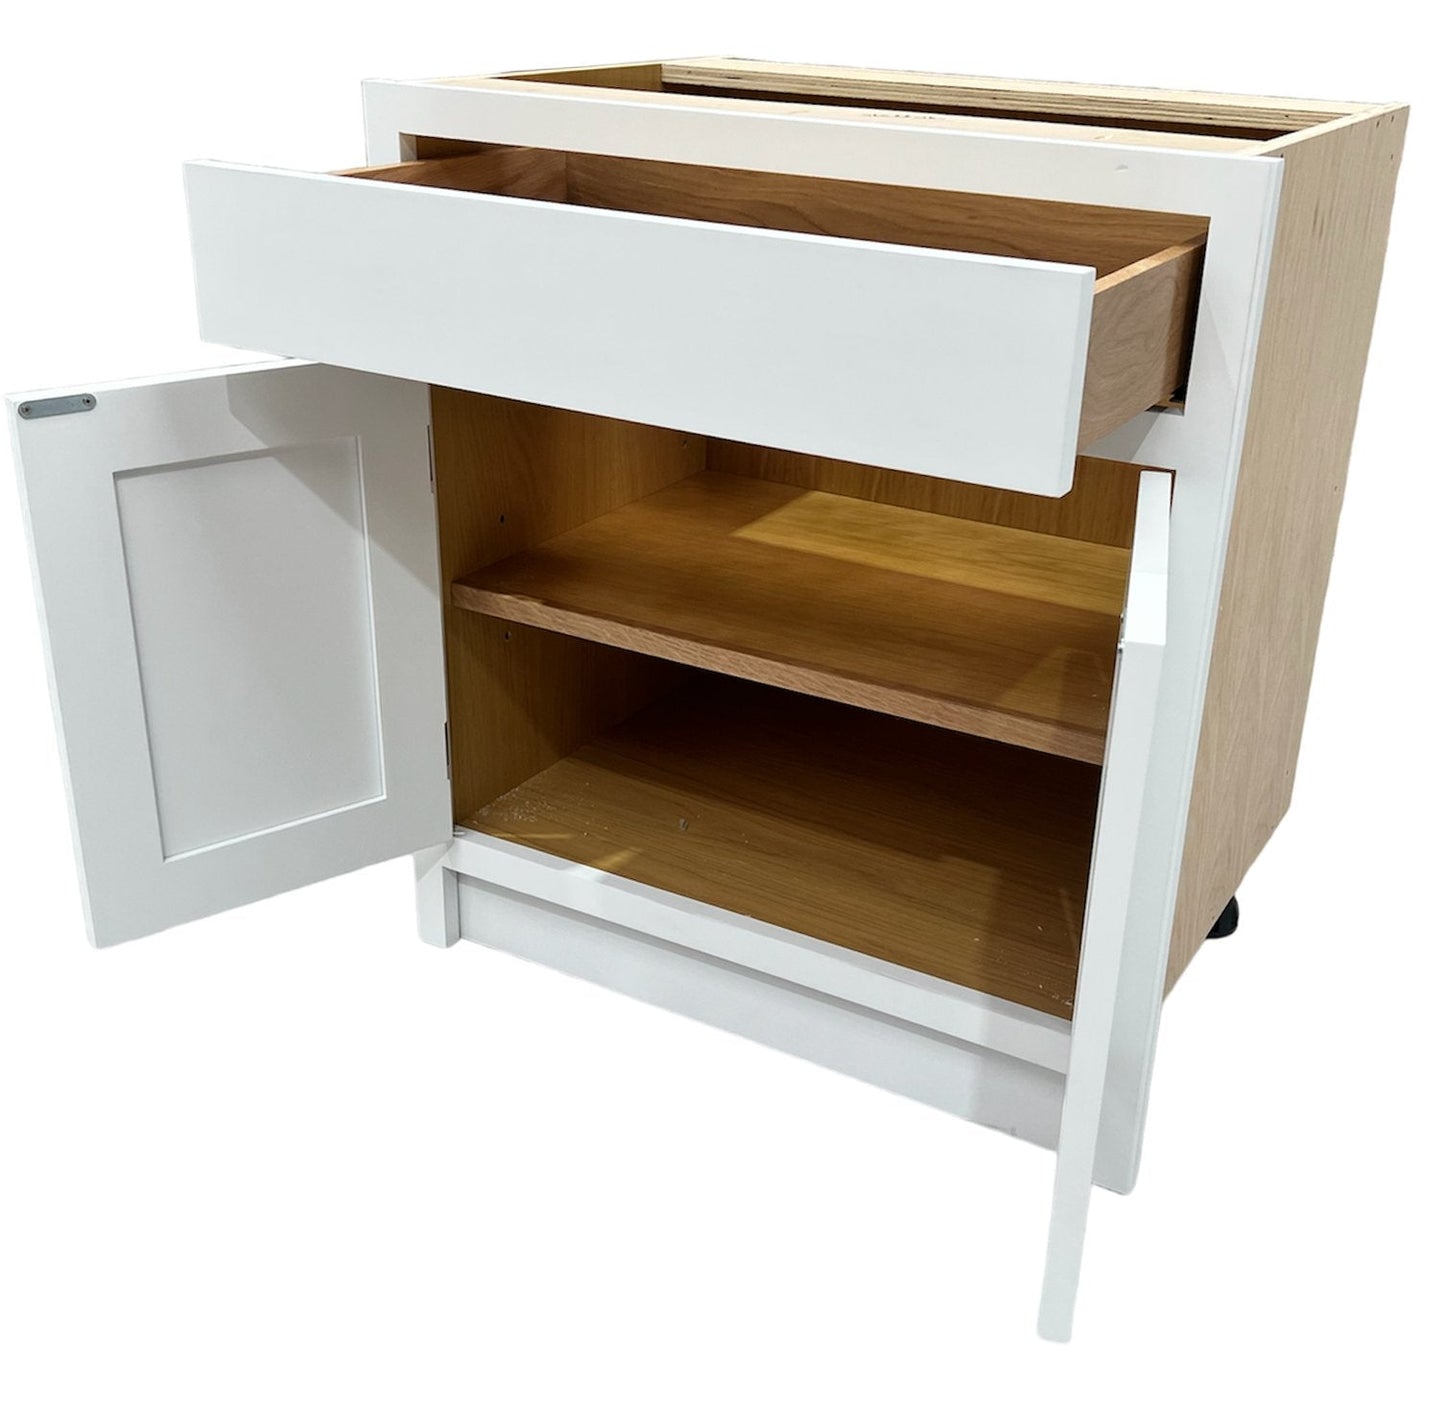 BDL 900 - 900mm Wide Drawerline base, 1 drawer, 2 door - The Painted Kitchen Company Ltd